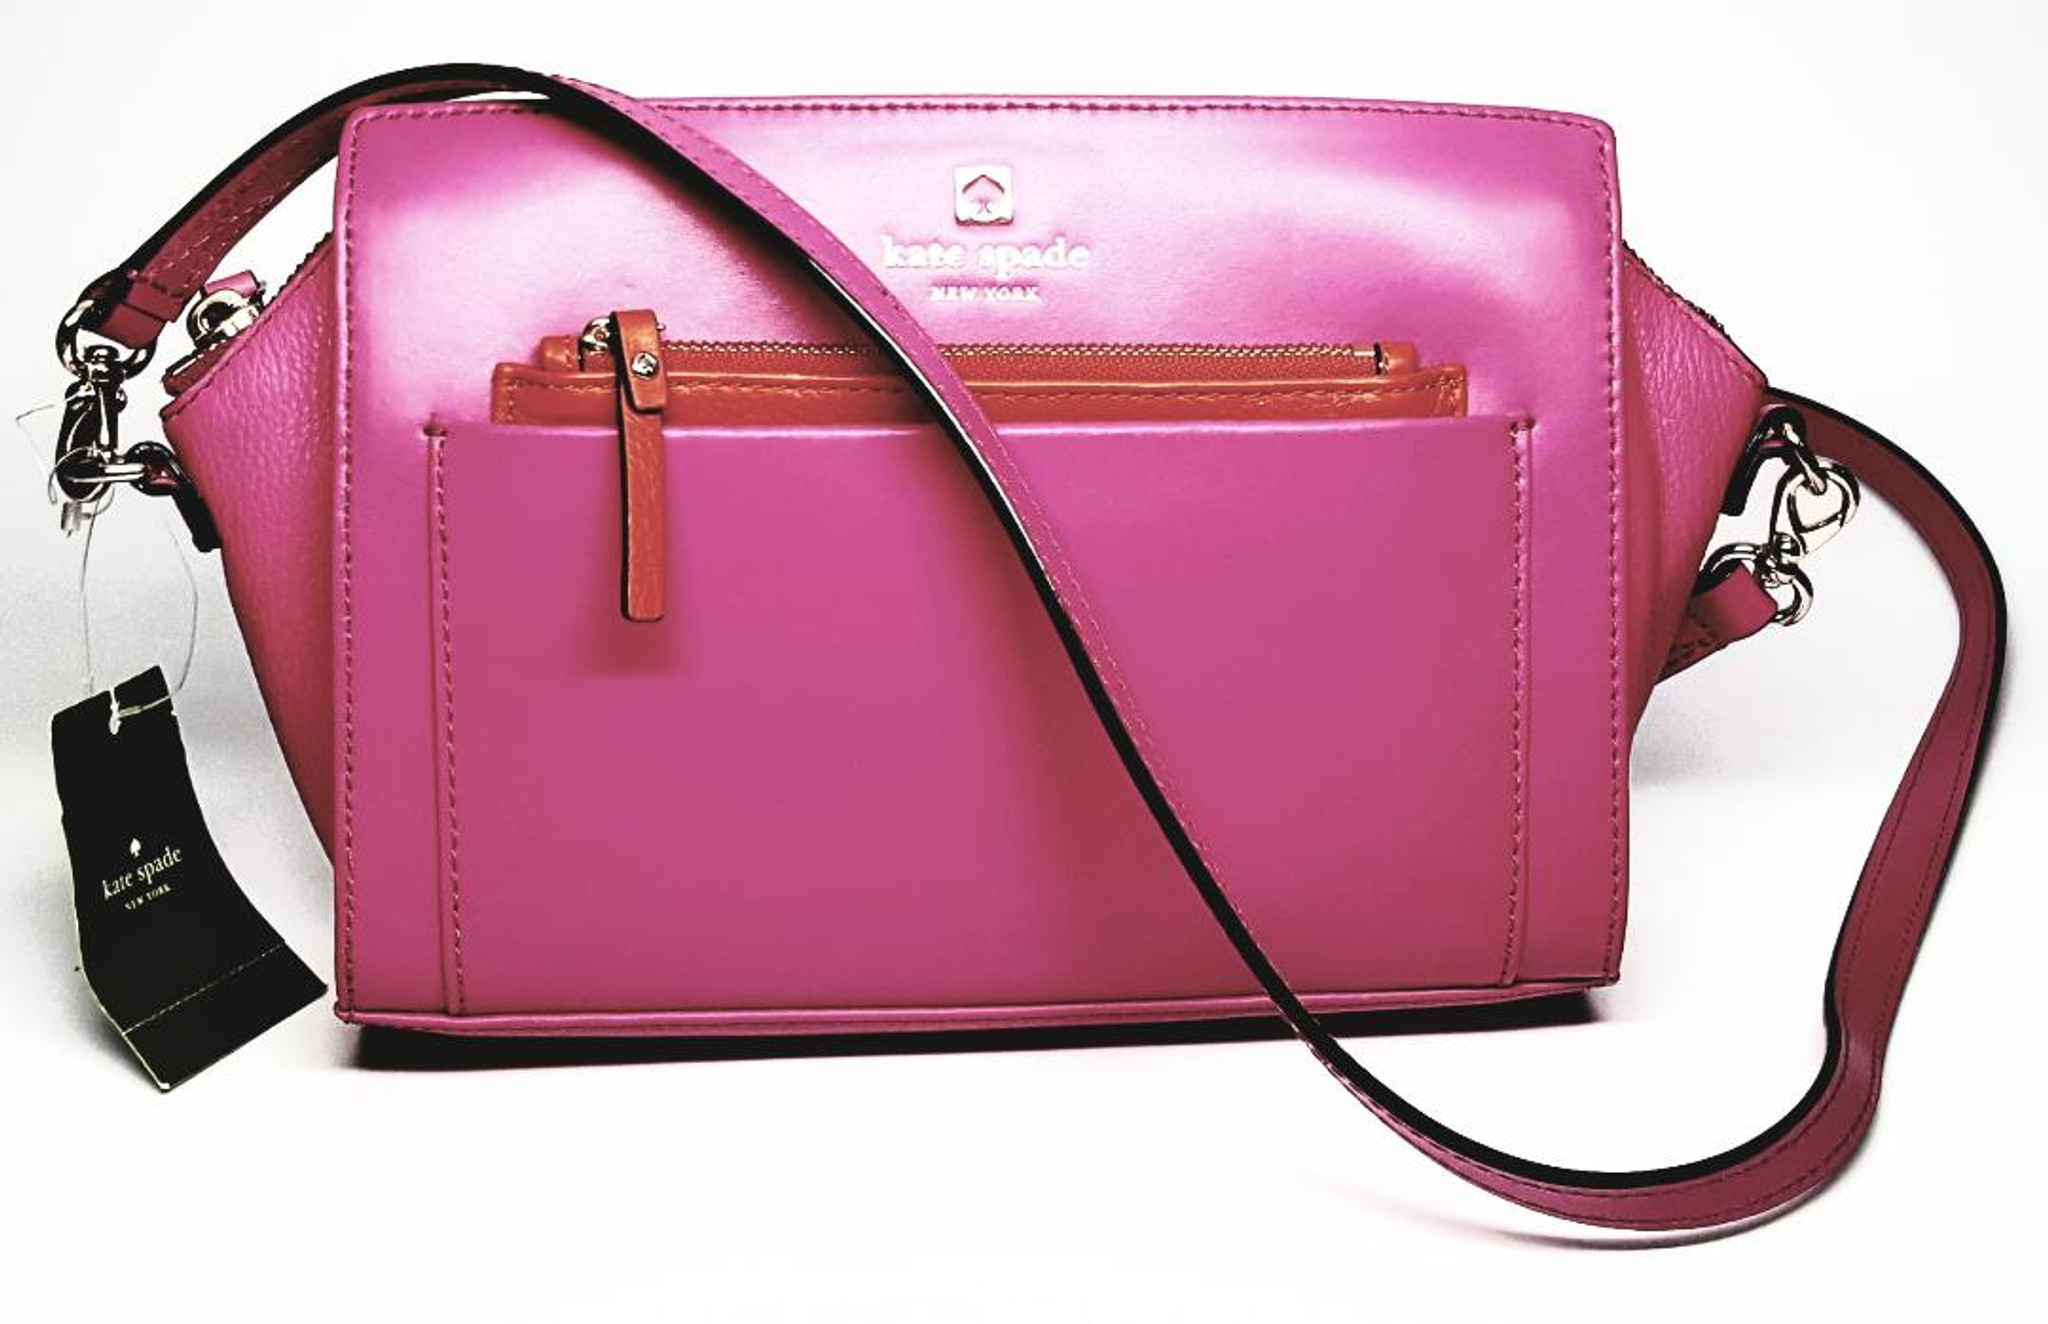 Women's Pink Kate Spade New York Handbags, Bags & Purses